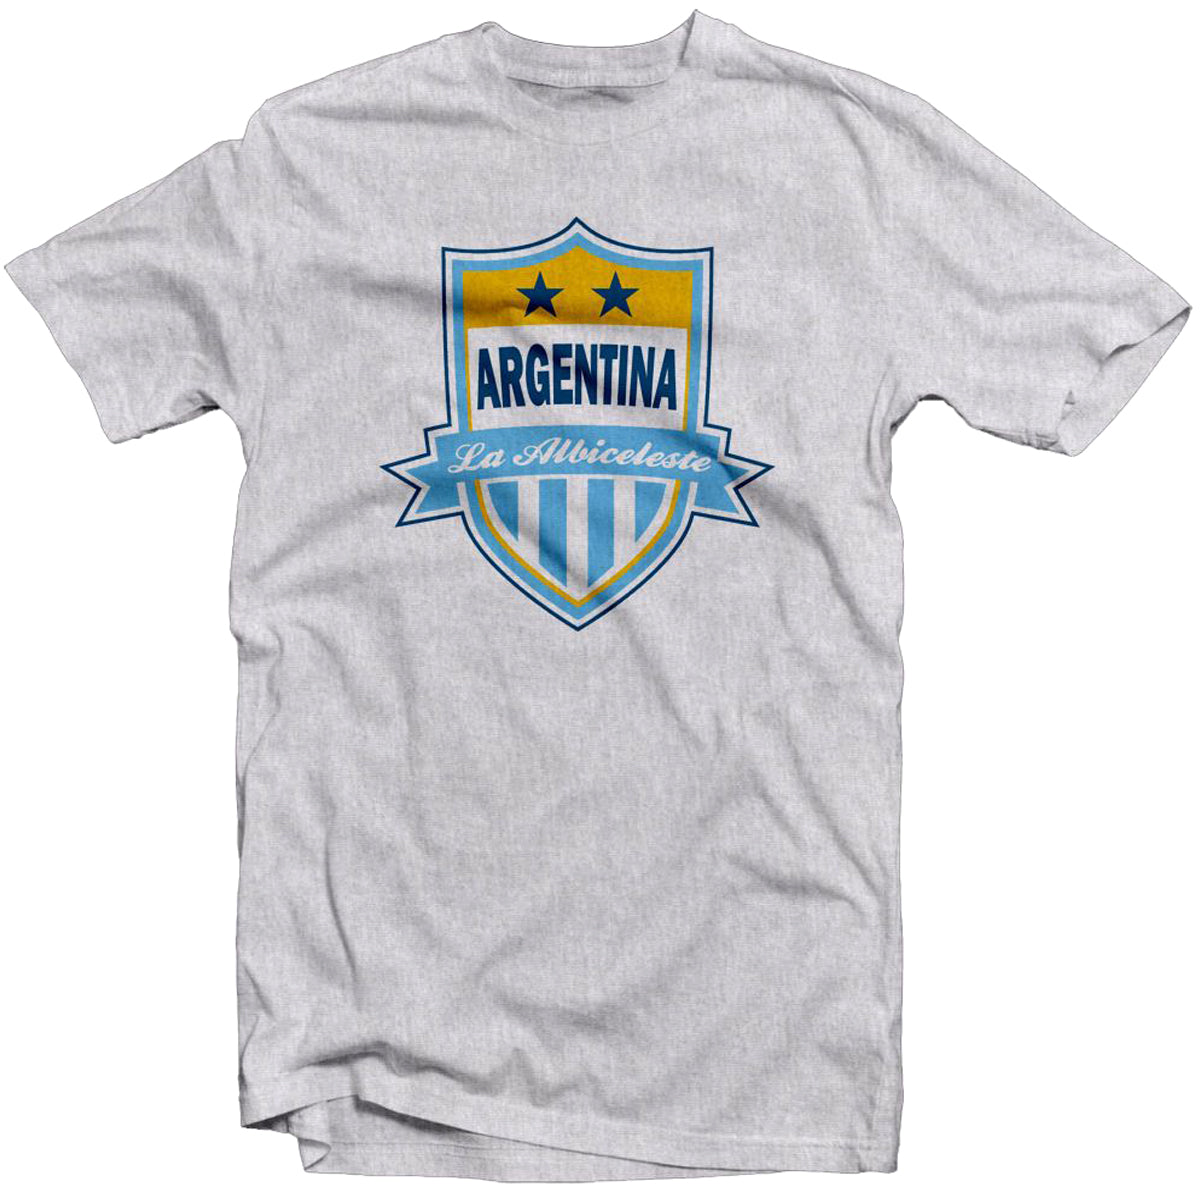 Soccer T-Shirt Diego Maradona Argentina Football Legend S-3XL, World Cup,  new